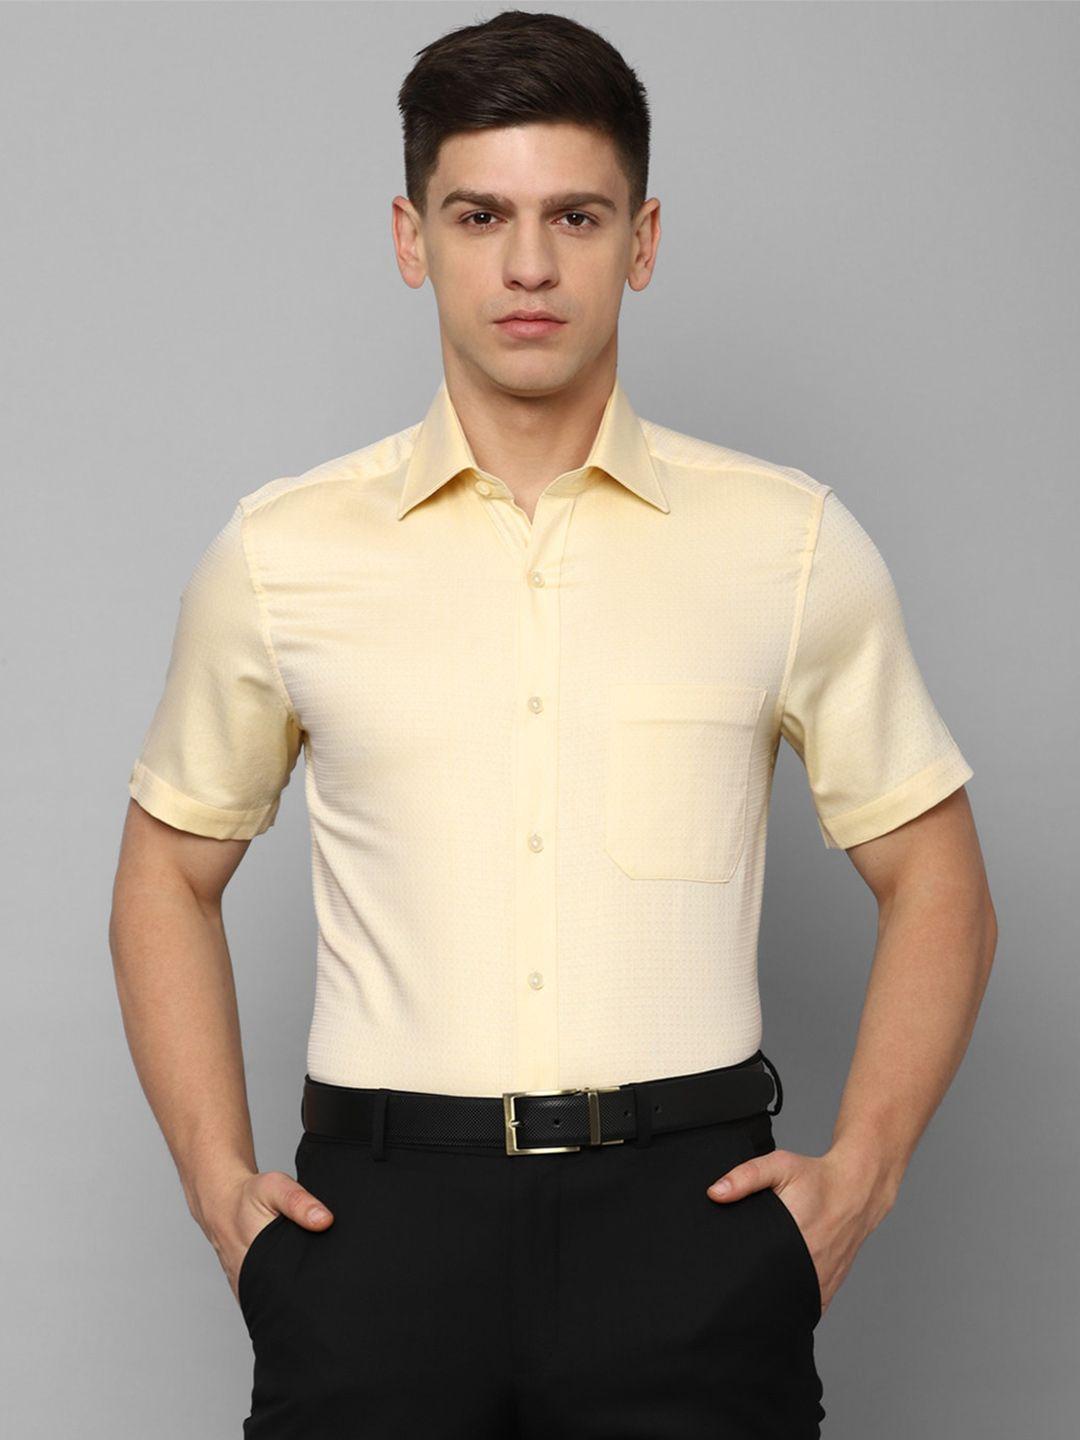 louis philippe geometric printed pure cotton formal shirt